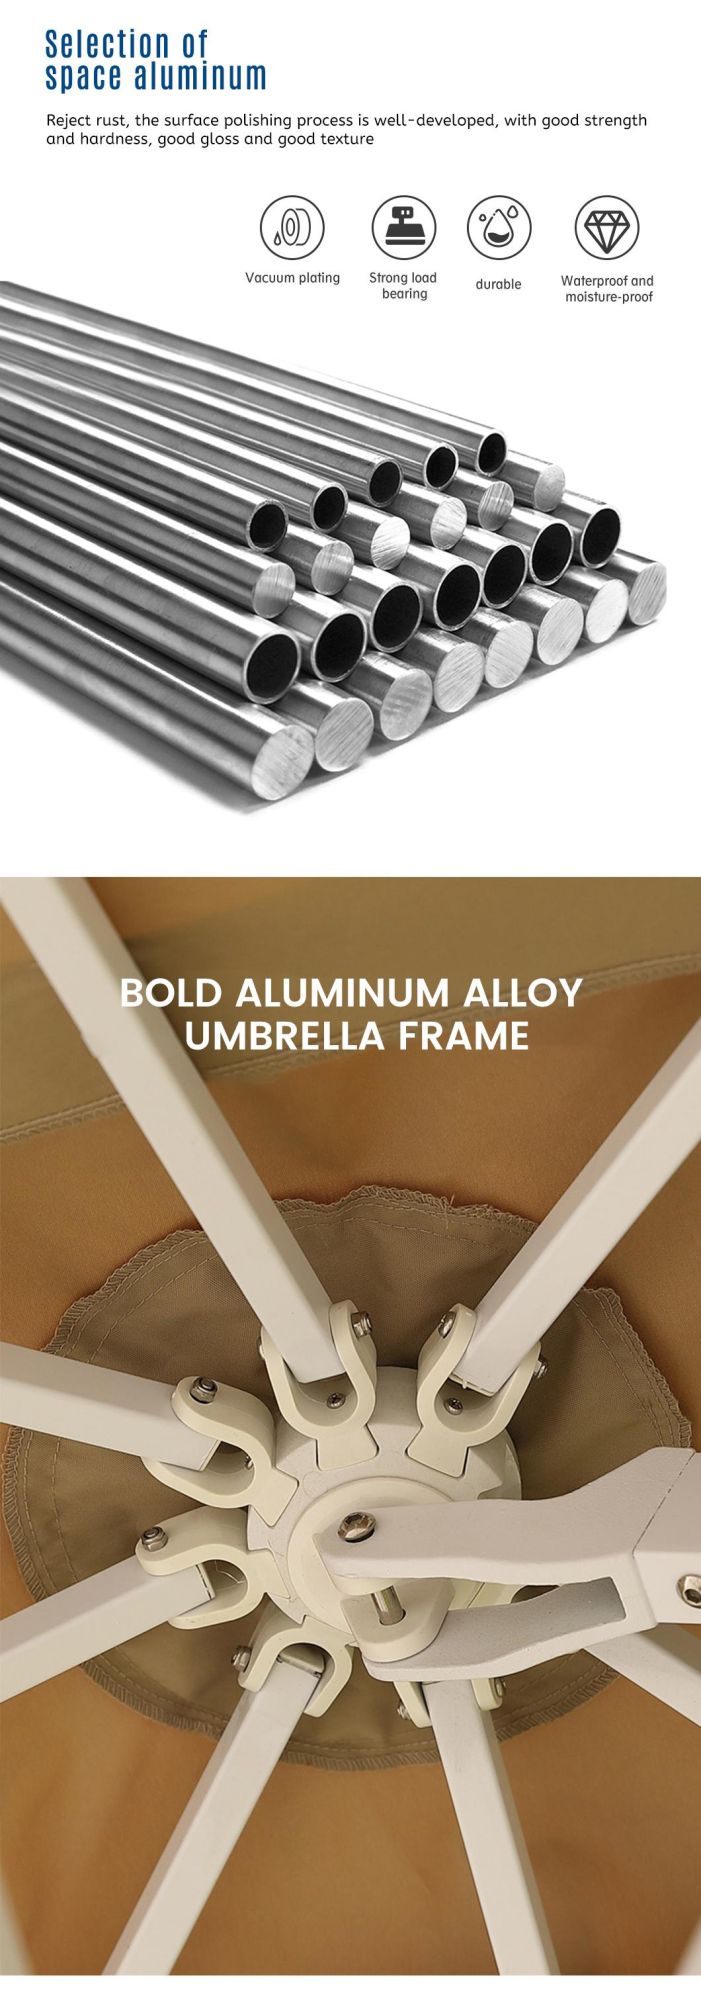 Traditional Anti-UV Single Top Iron Middle Pole Hydraulic Side Pole Umbrella